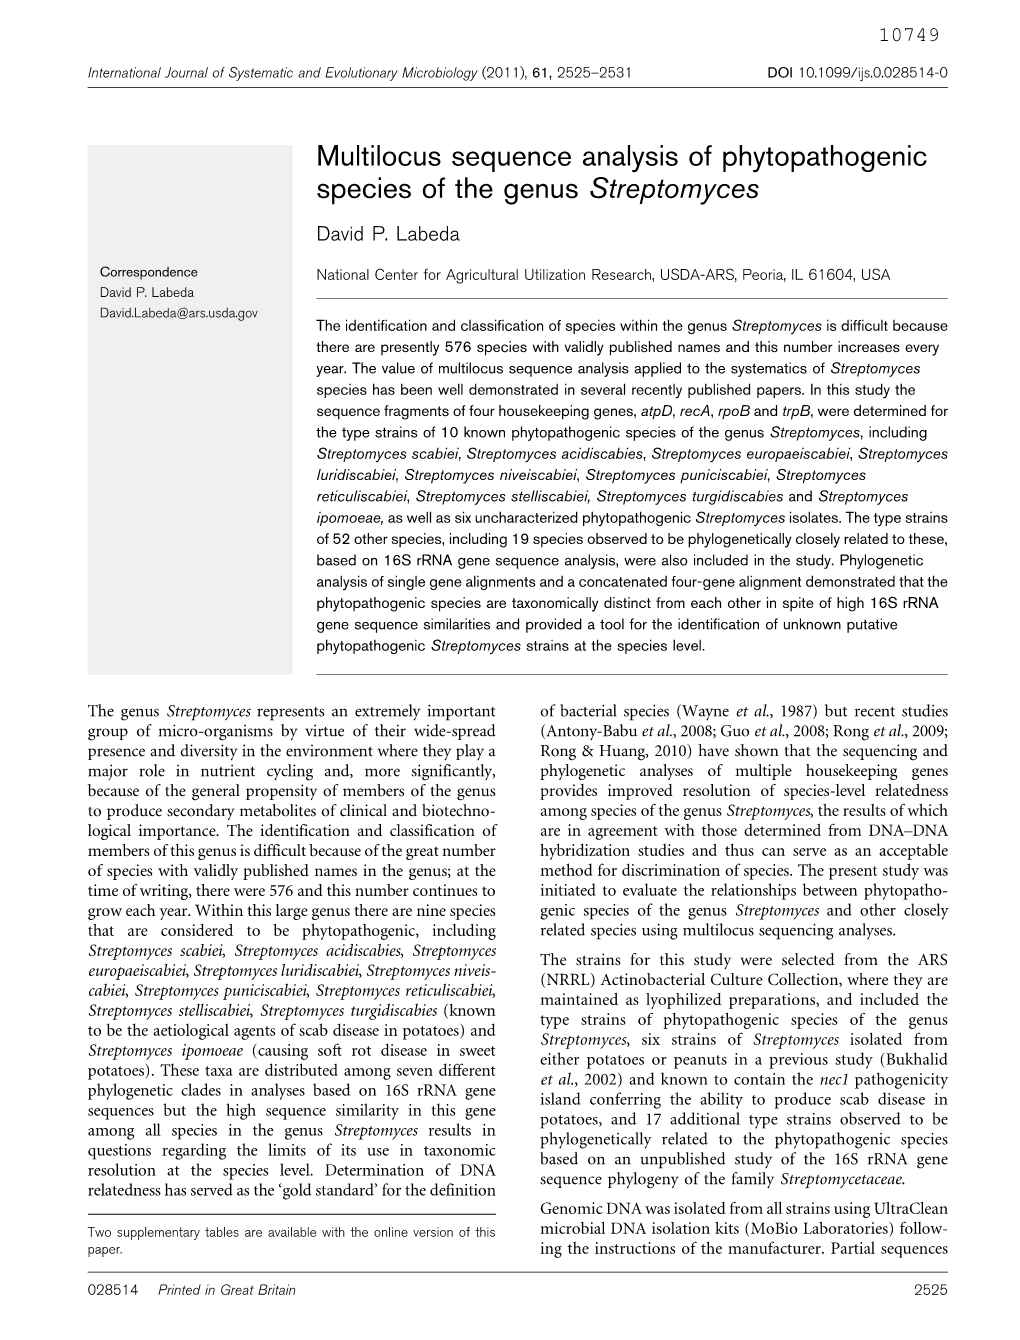 Multilocus Sequence Analysis of Phytopathogenic Species of the Genus Streptomyces